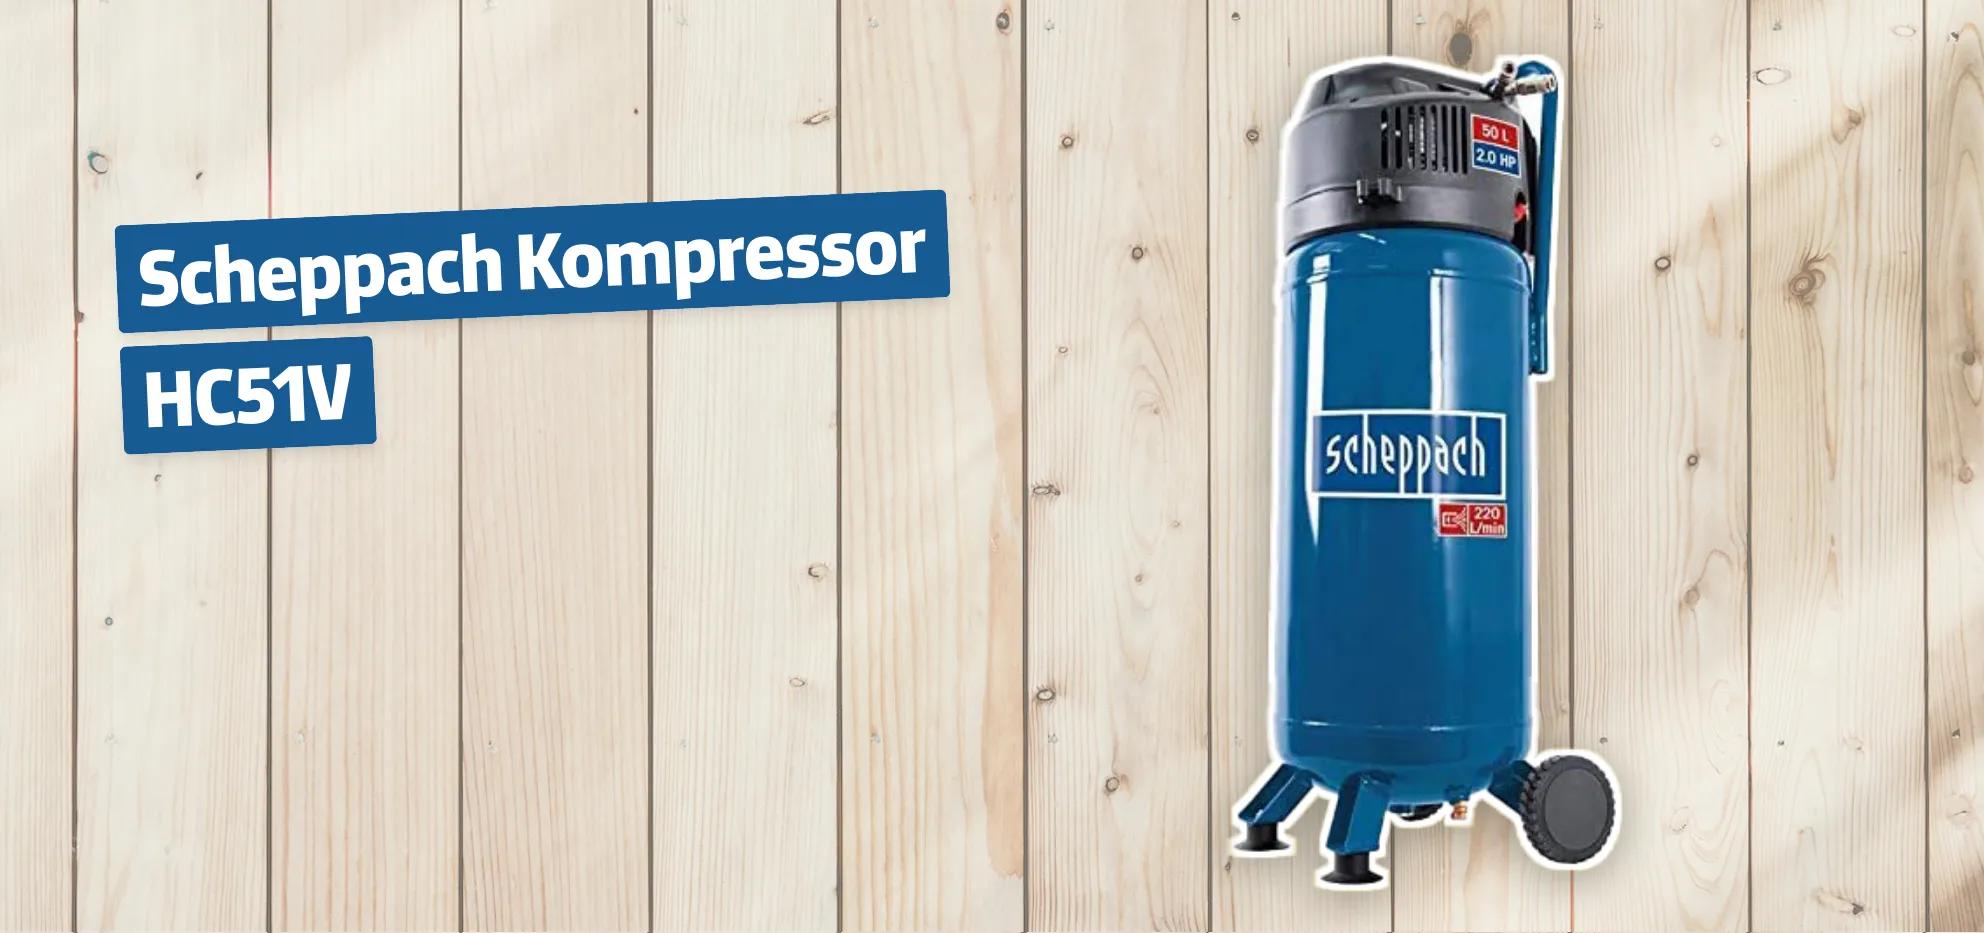 Scheppach Kompressor HC51V